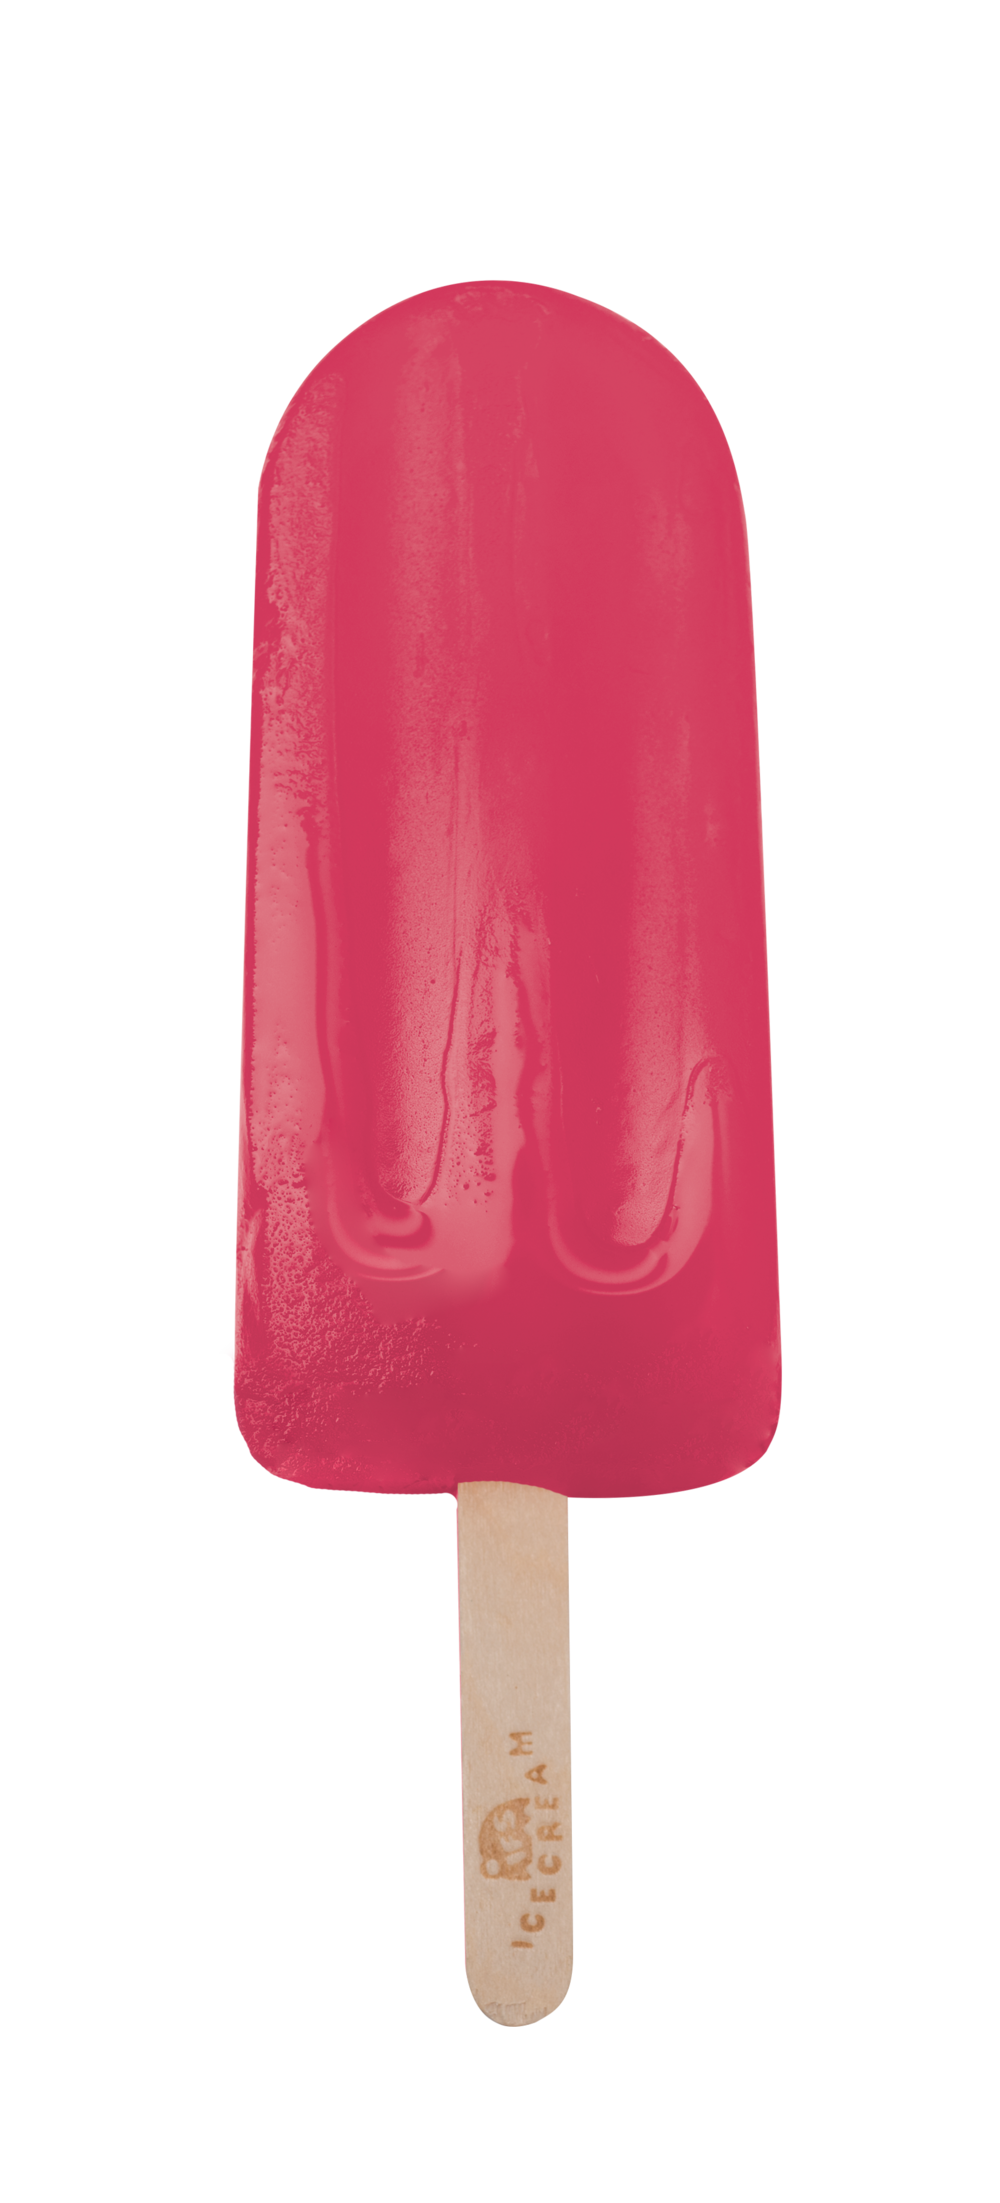 Roze ijs pop PNG hoogwaardige Afbeelding